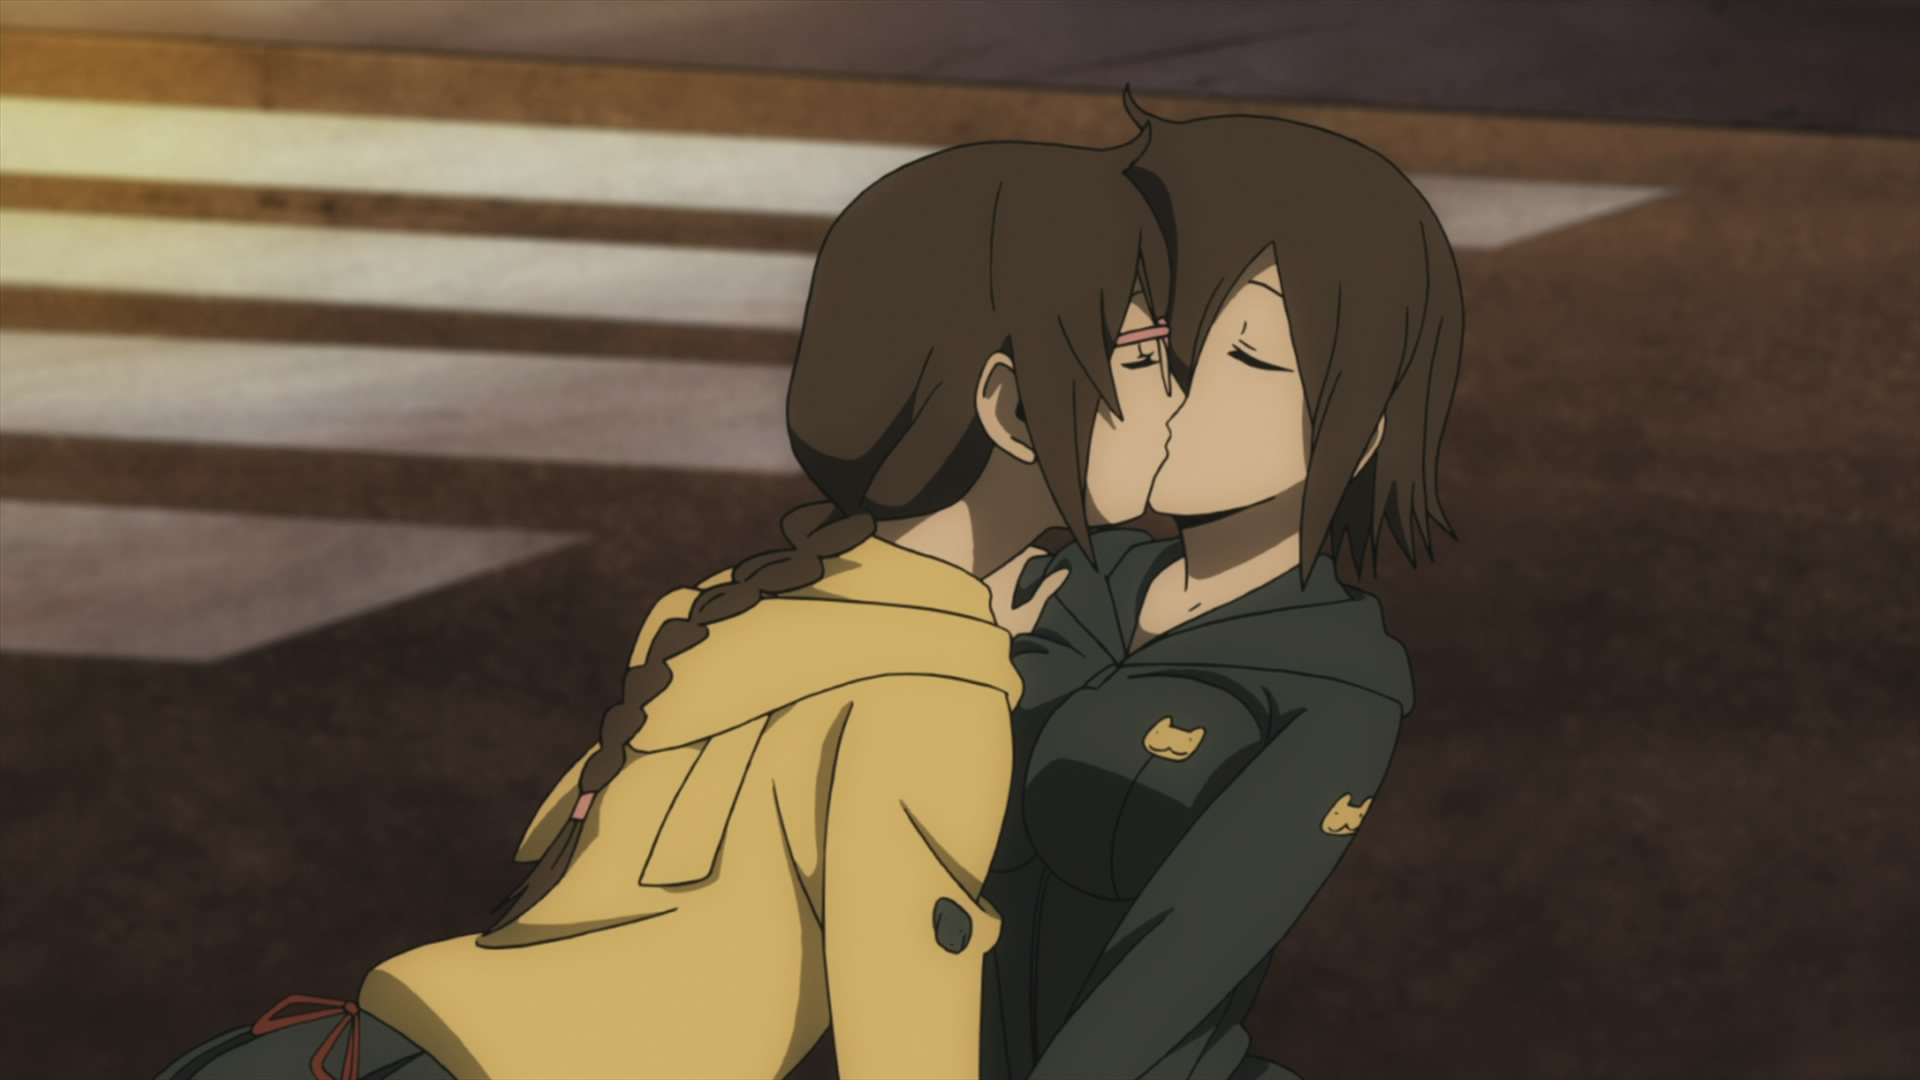 Anime 1920x1080 anime anime girls Anime screenshot twins yuri kissing two women Orihara Kururi Orihara Mairu Durarara!!